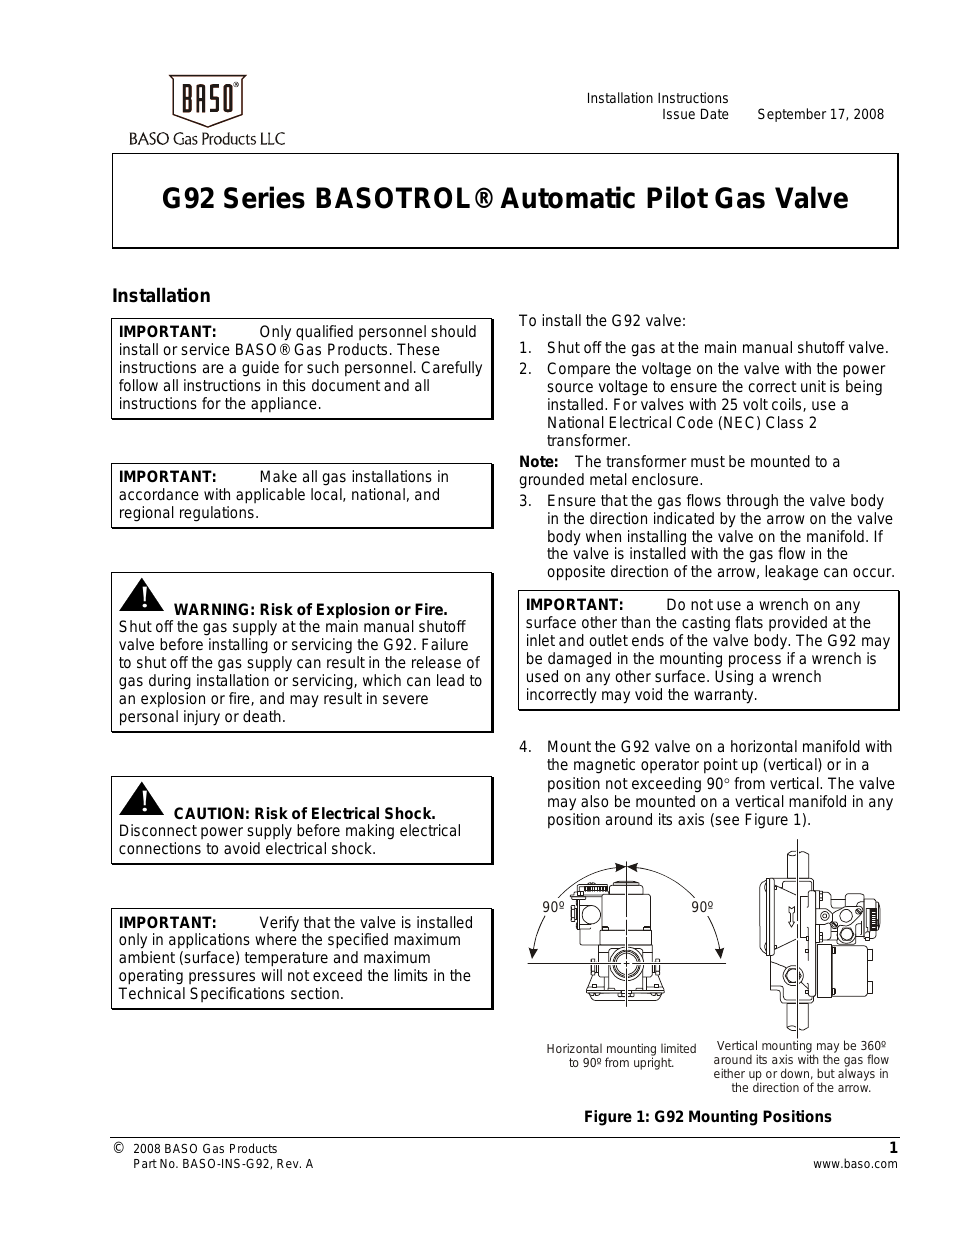 G92 Series Automatic Pilot Gas Valve